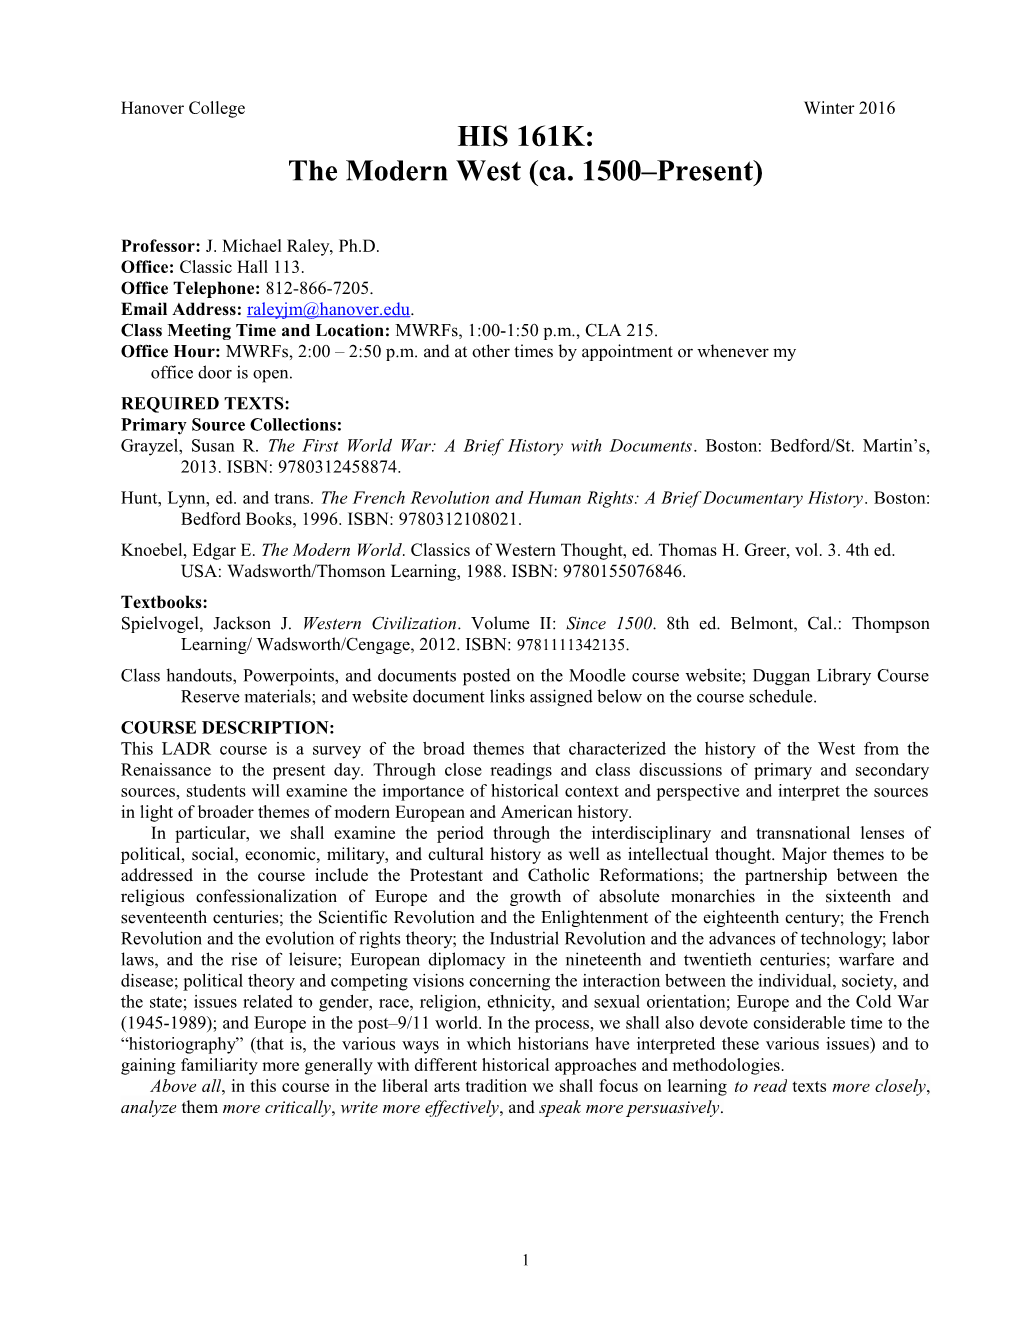 The Modern West (Ca. 1500 Present)